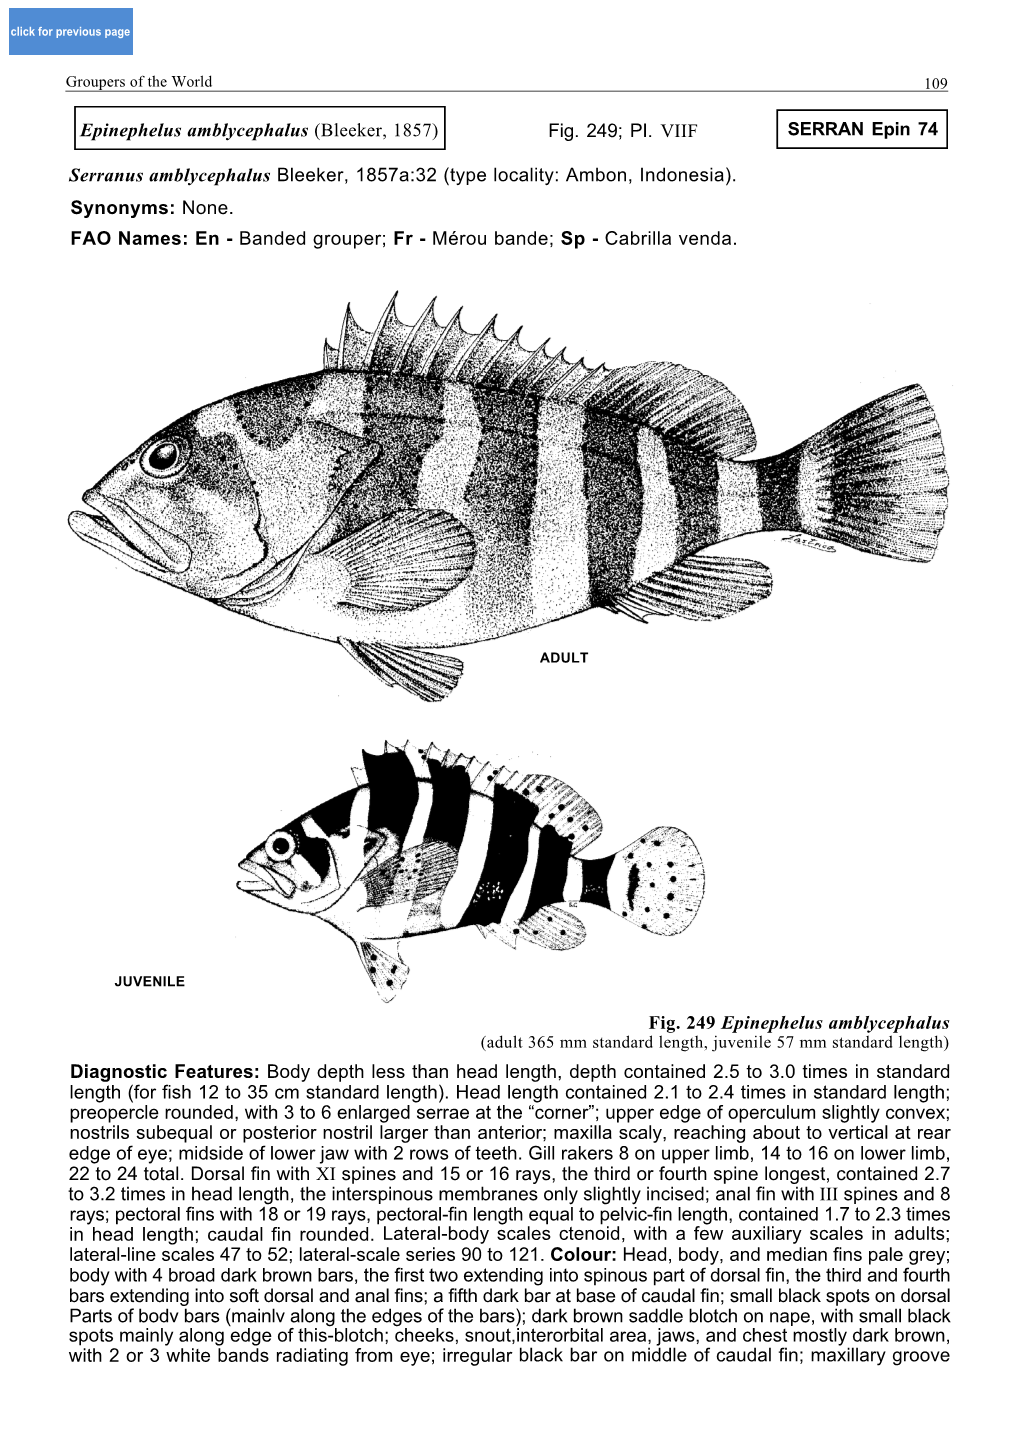 Serranus Amblycephalus Bleeker, 1857A:32 (Type Locality: Ambon, Indonesia)